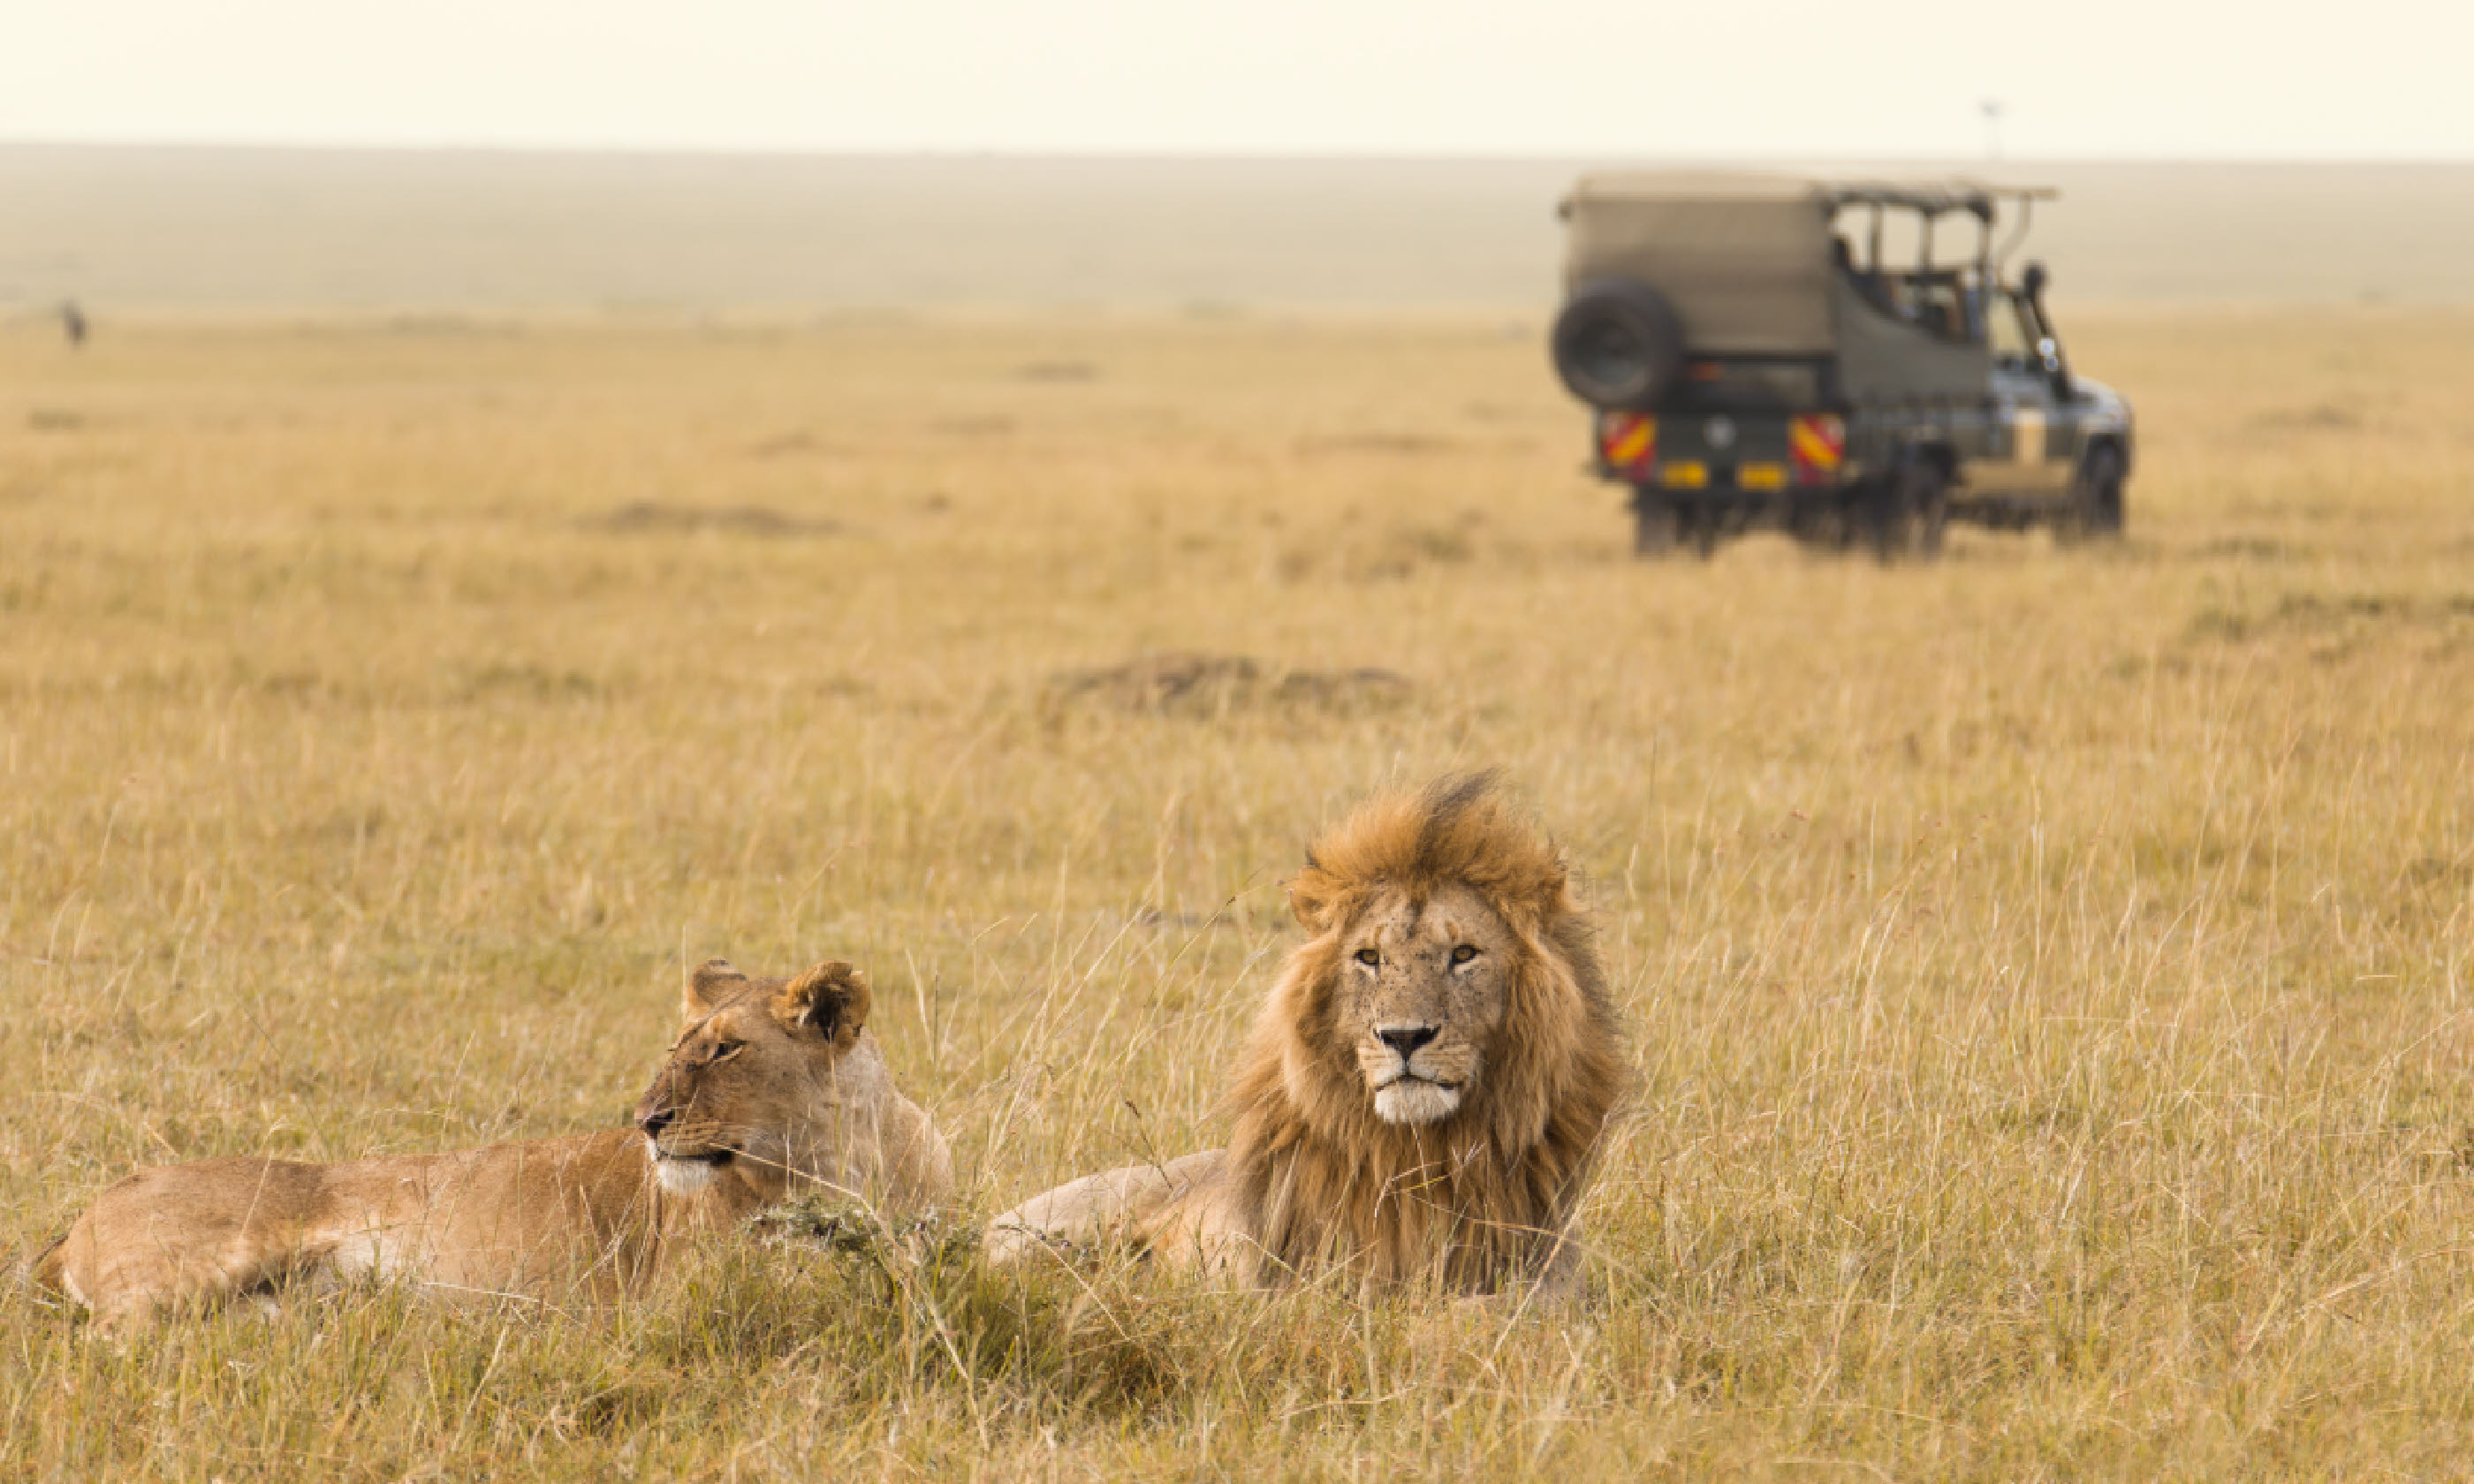 Jeep Safari in Kenya (Shutterstock)